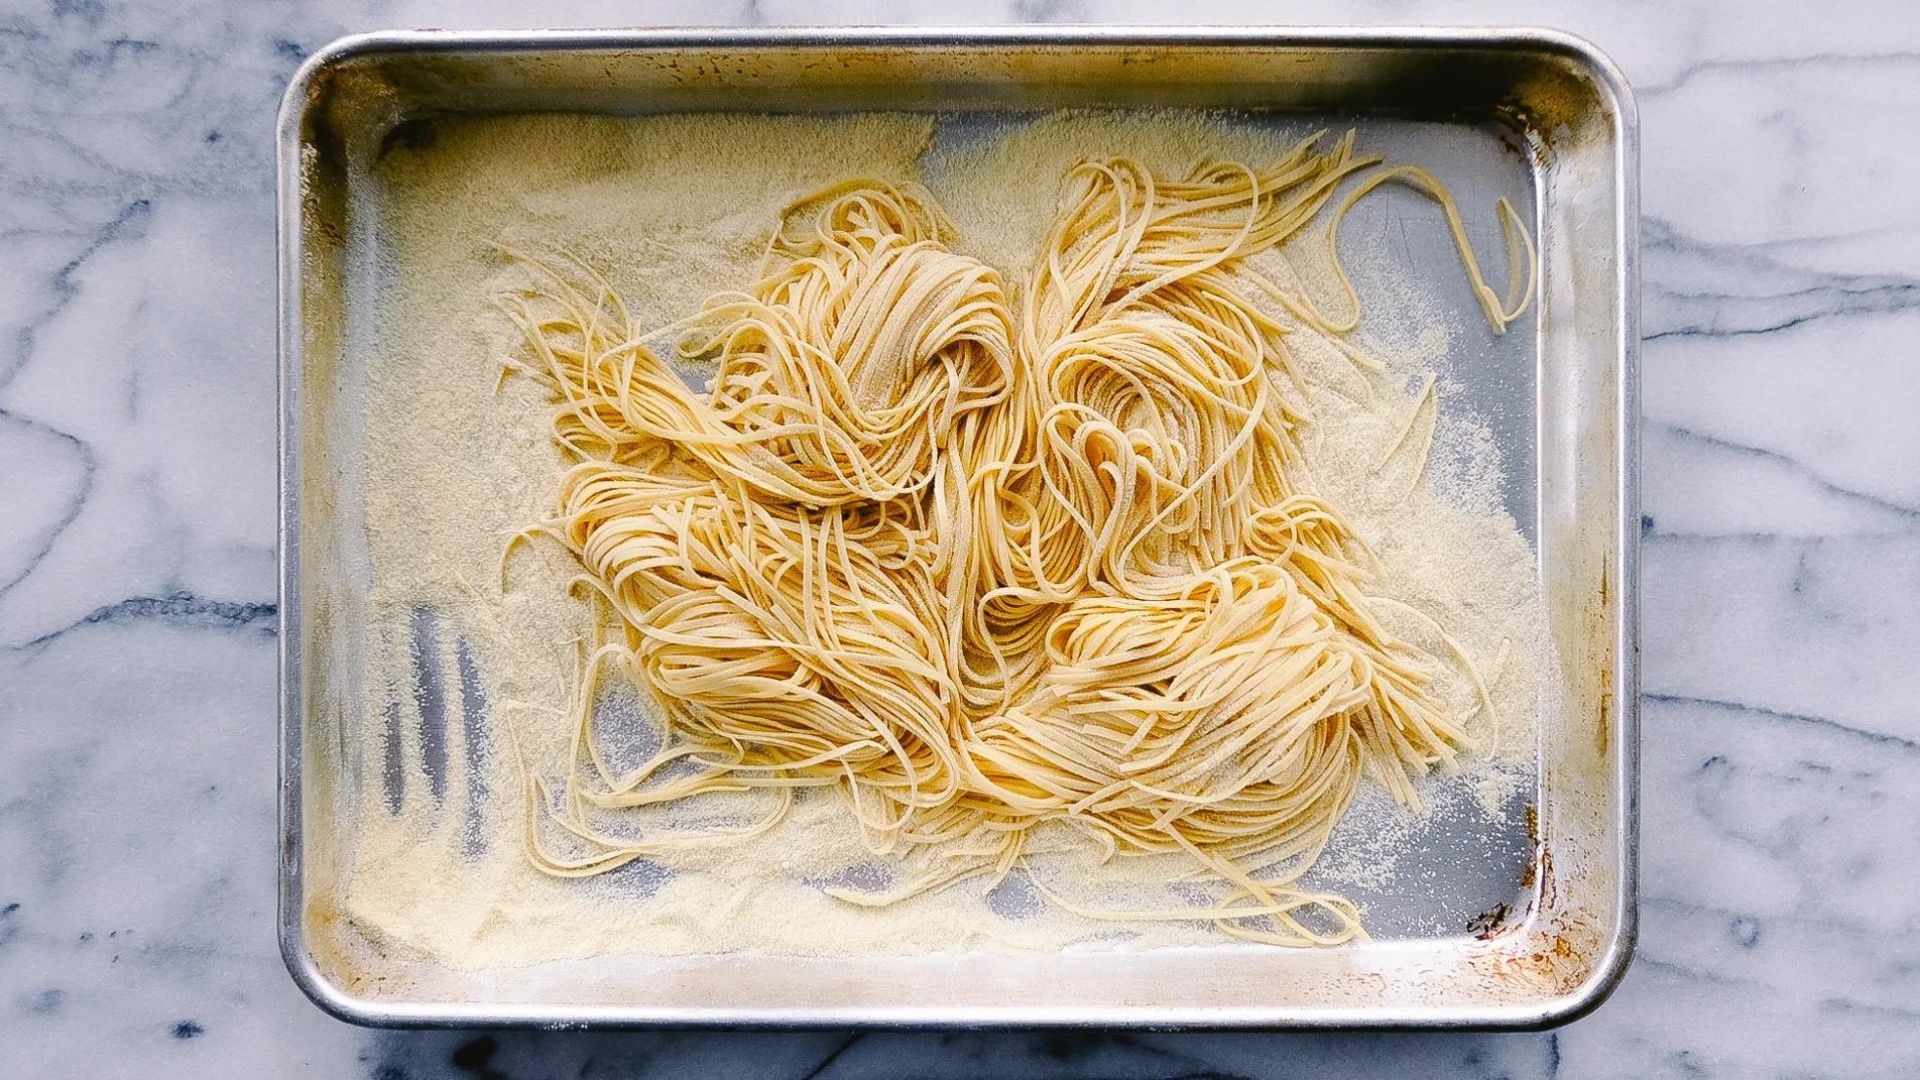 this image shows Pasta Noodles